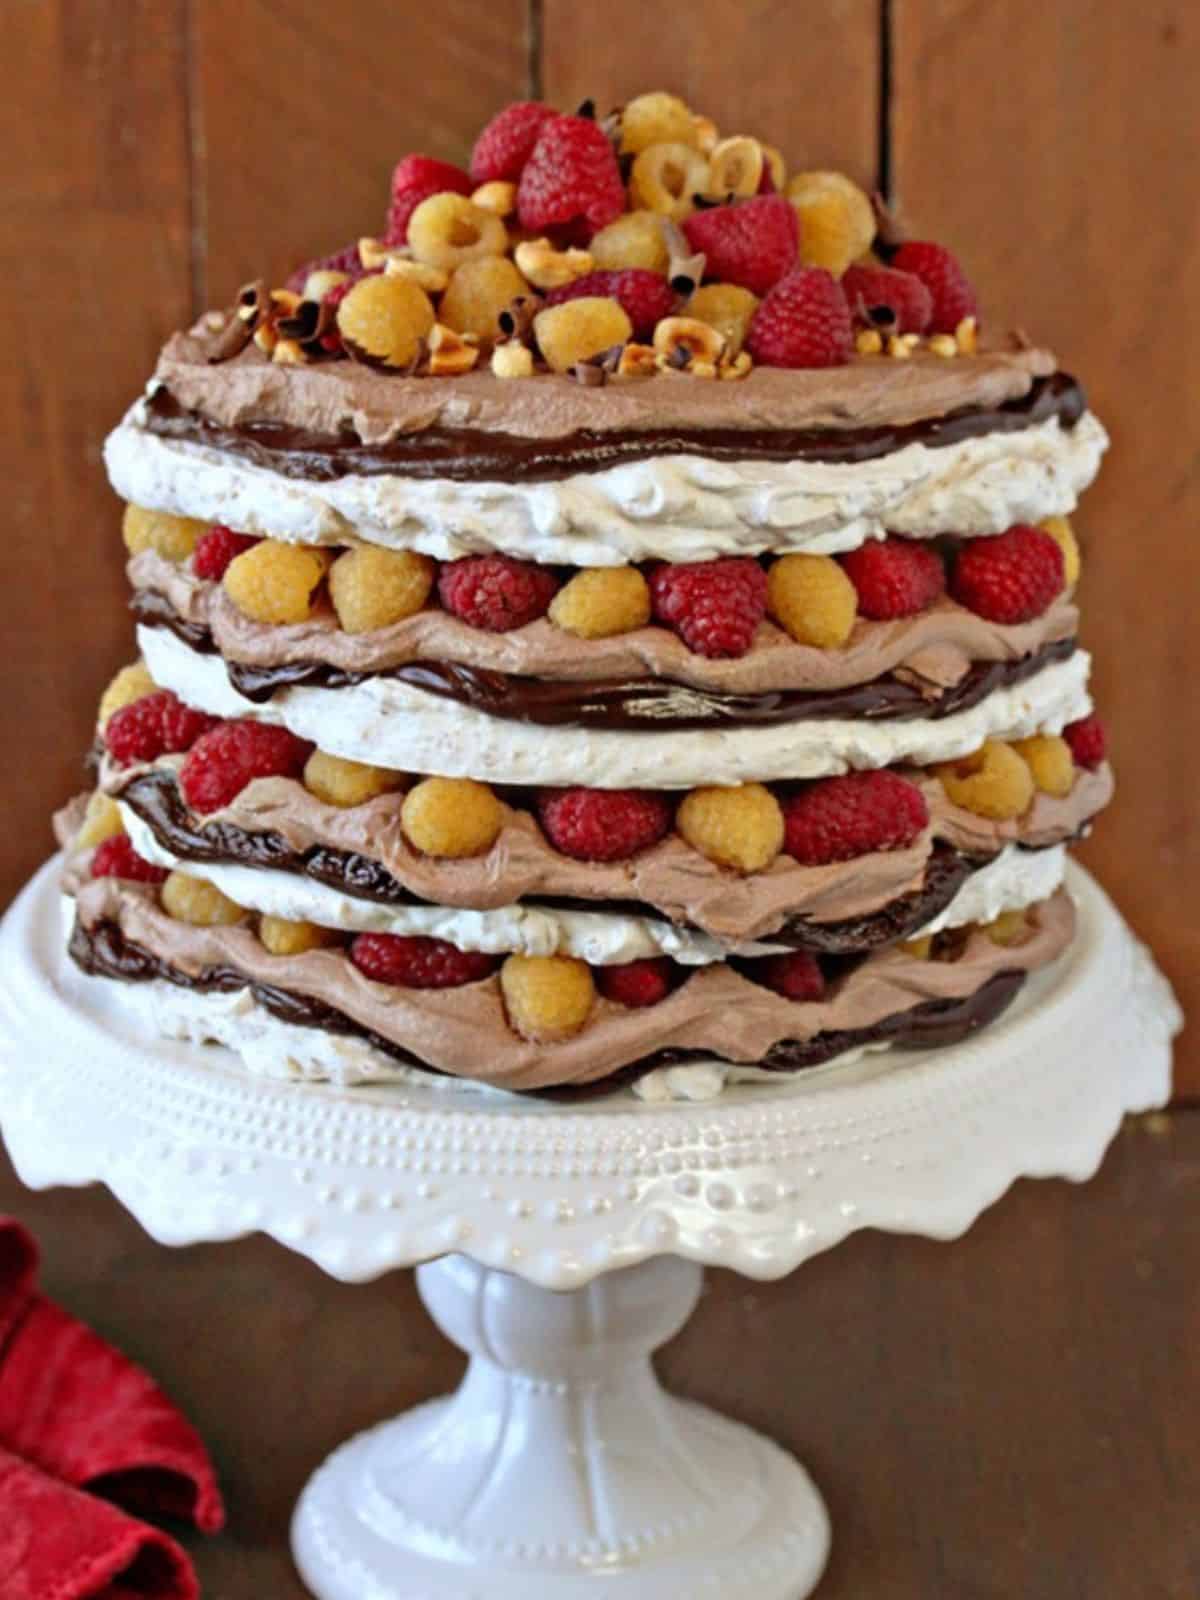 Hazelnut Meringue Cake with layers of chocolate ganache and whipped cream.